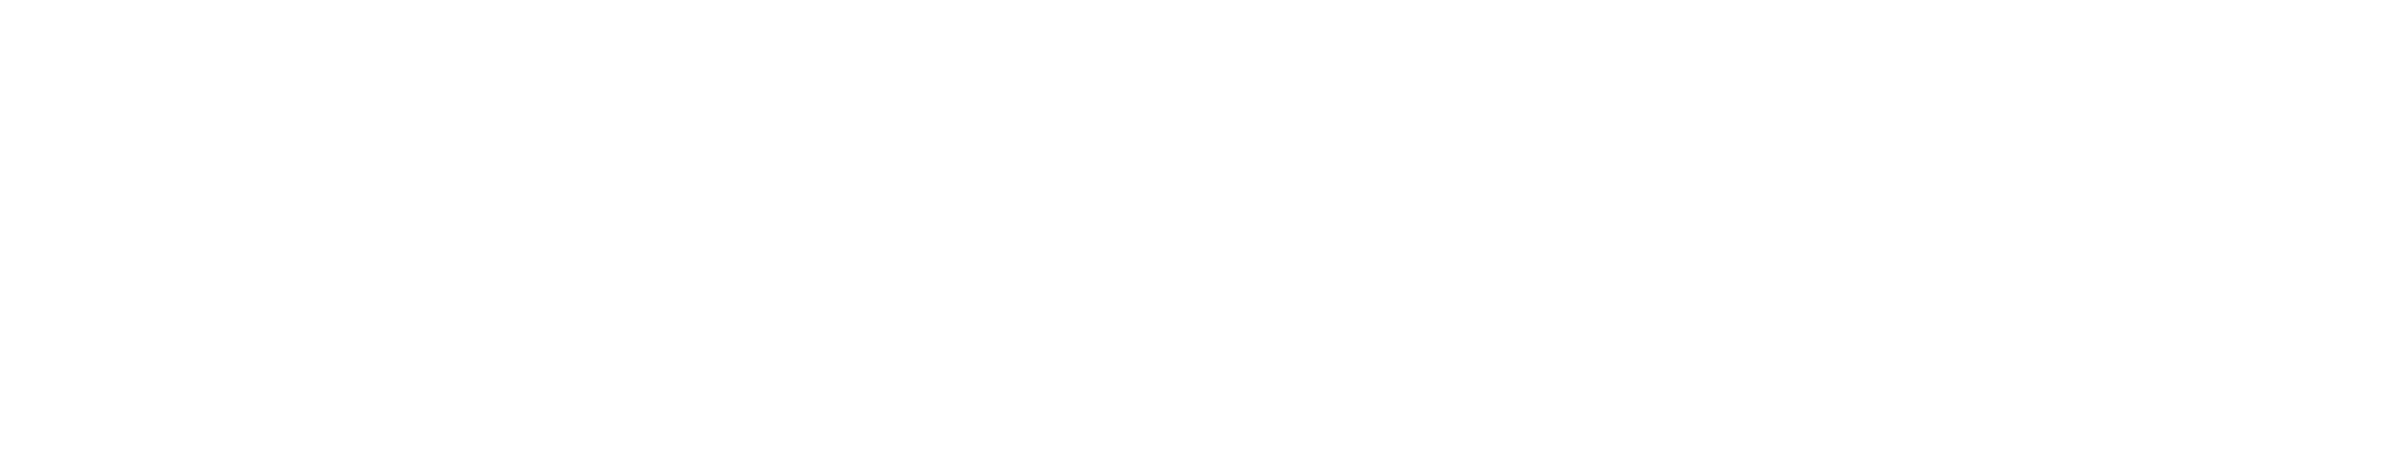 FOSSIL Logo